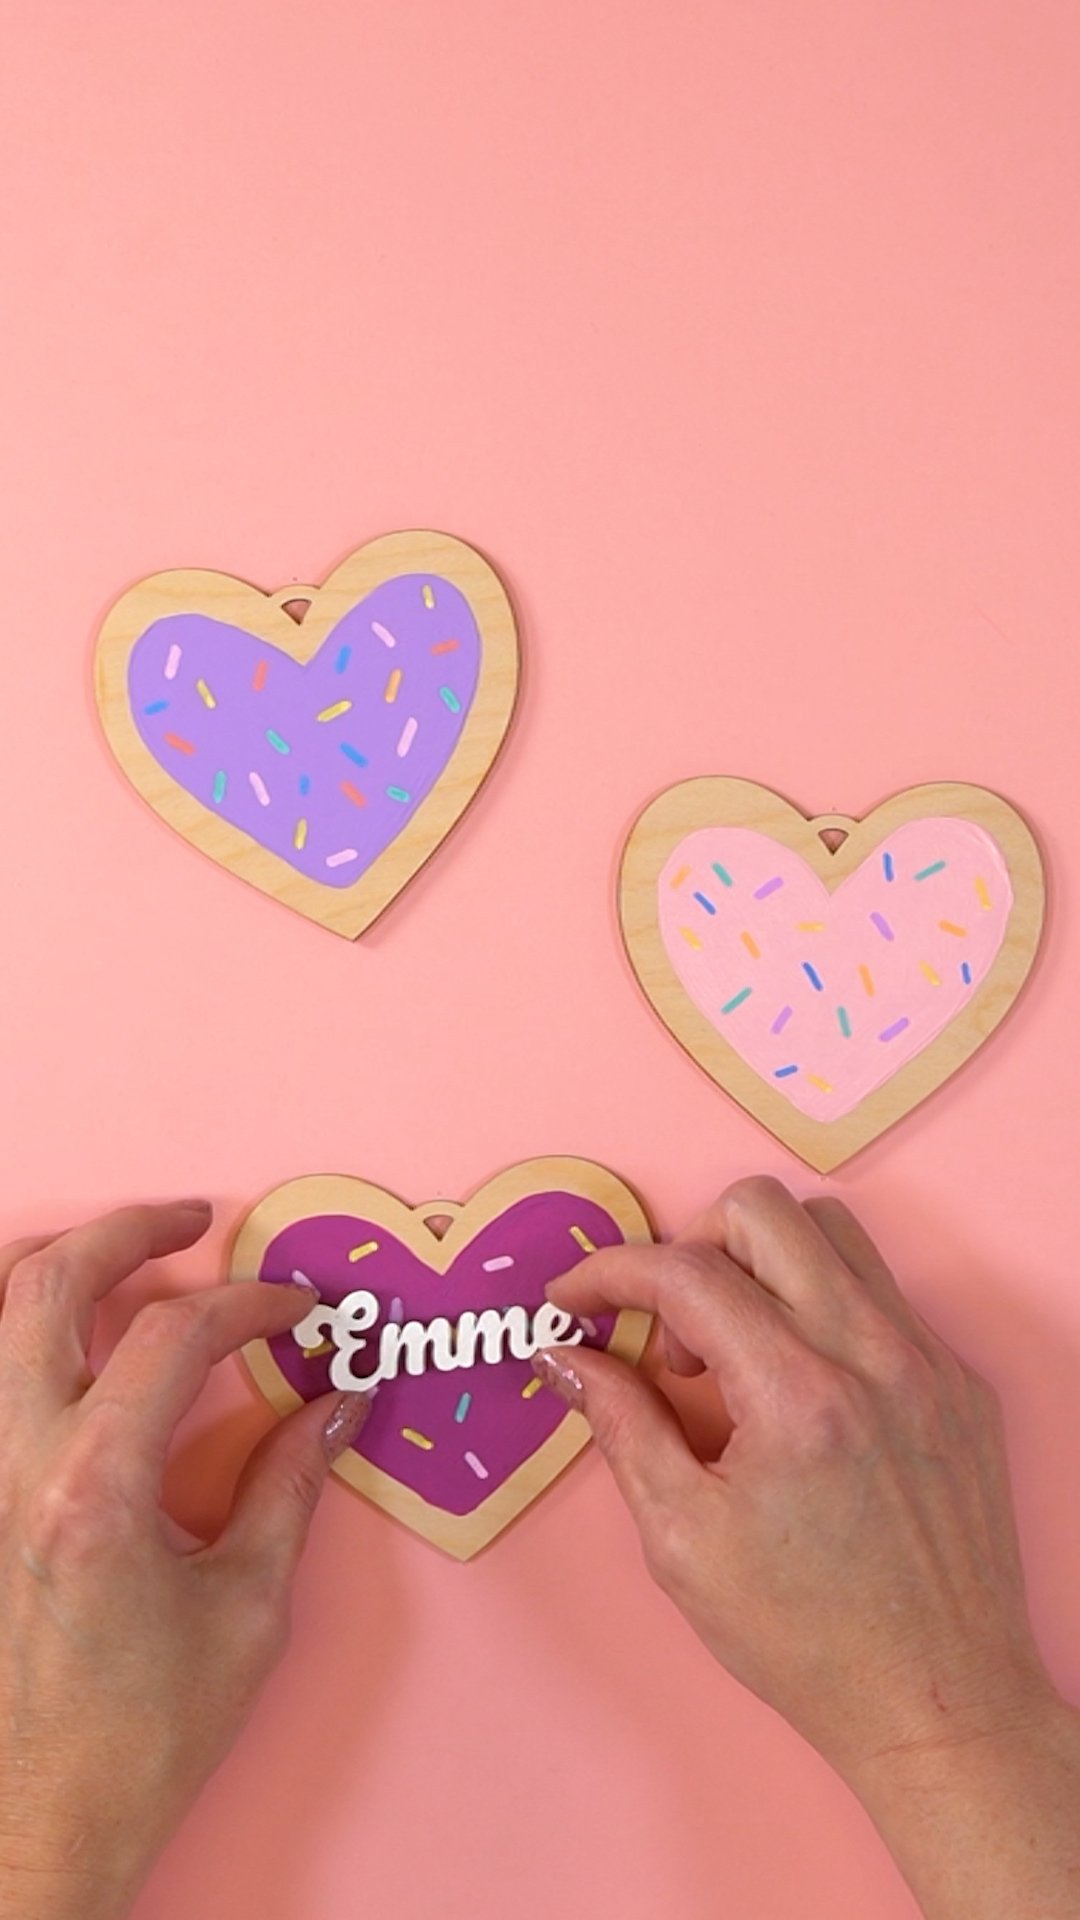 Hands assembling a Valentine heart "cookie" ornament